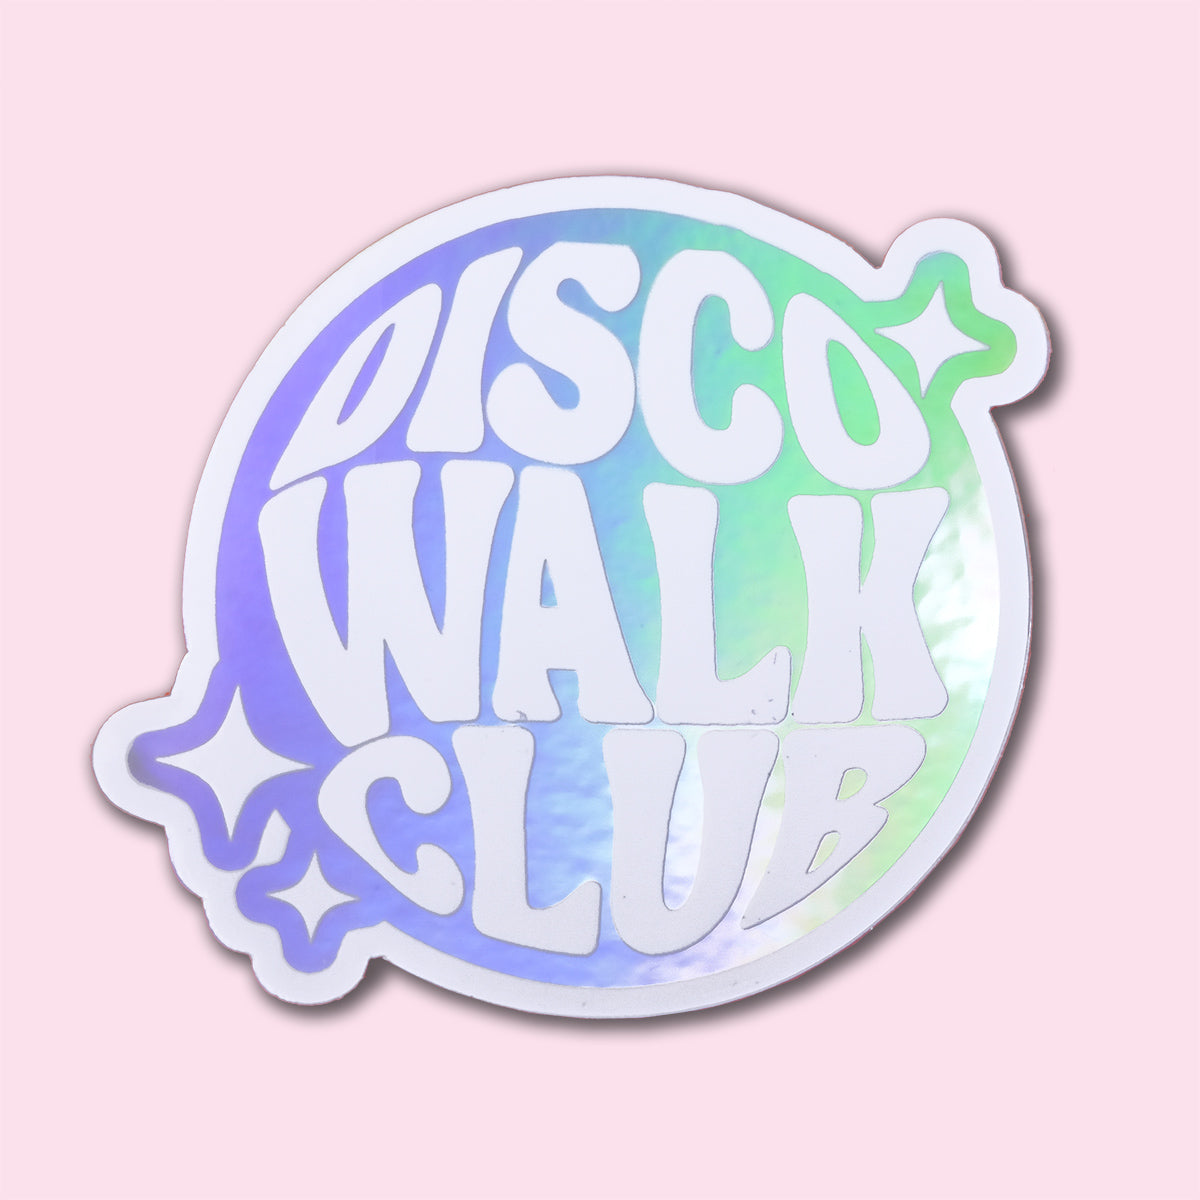 Disco Walk Club Sticker